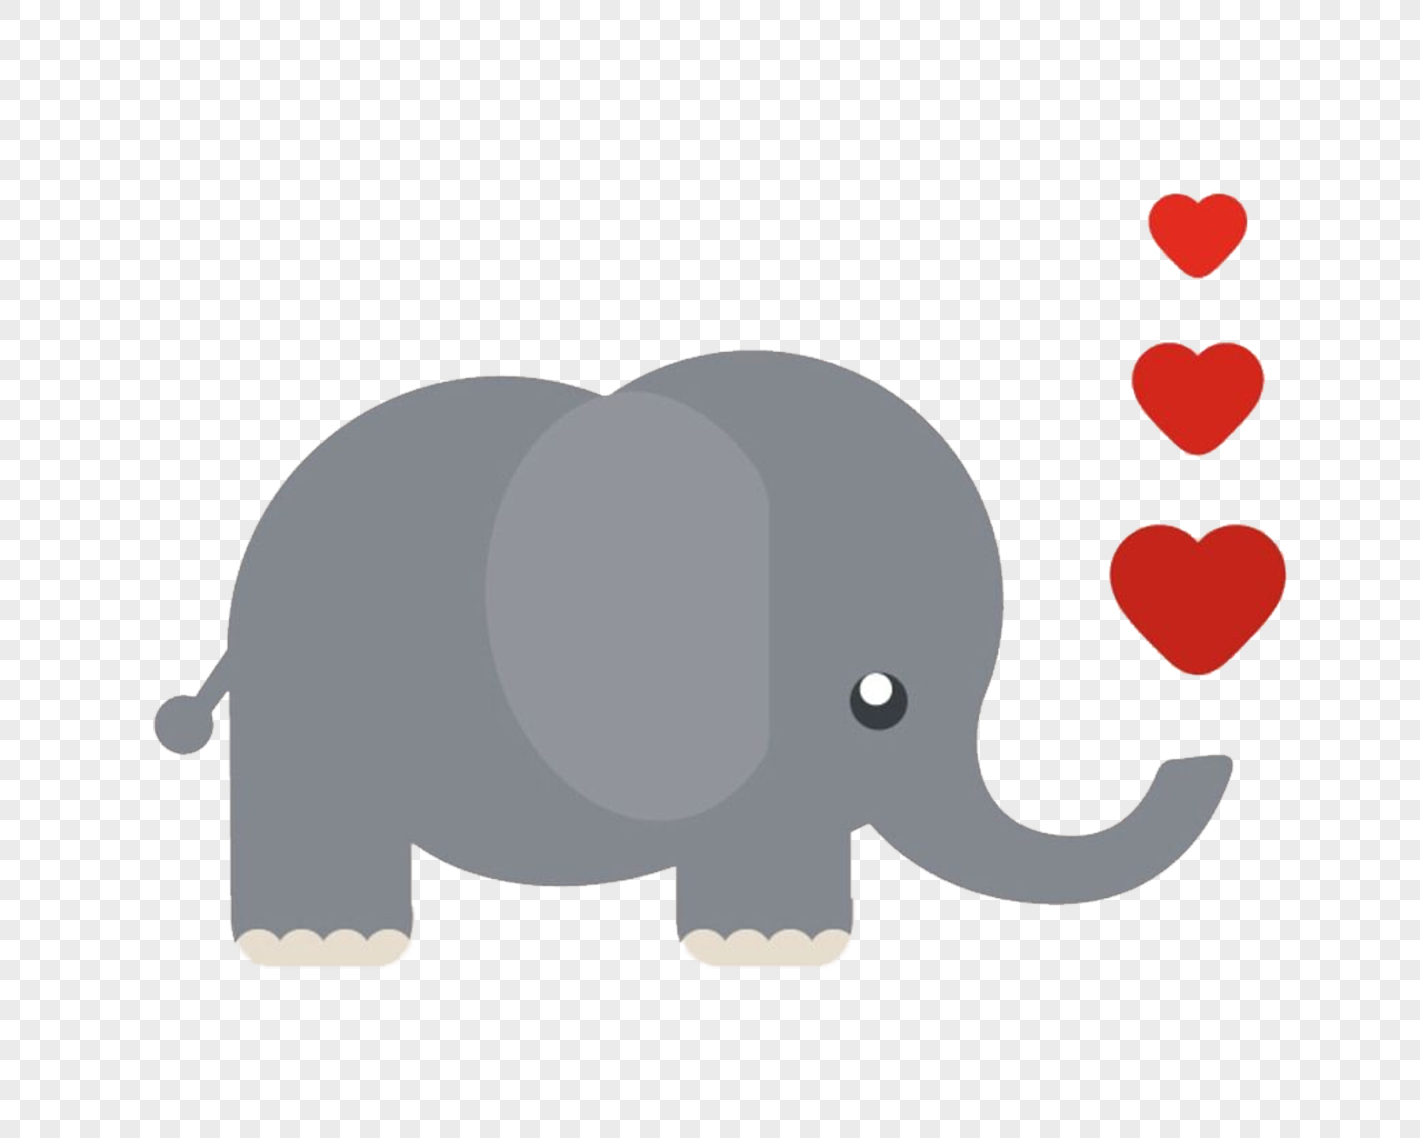 Sister elephant. Слон с сердечком. Слон рисунок. Слоник рисунок. Шаблон слоника для аппликации.